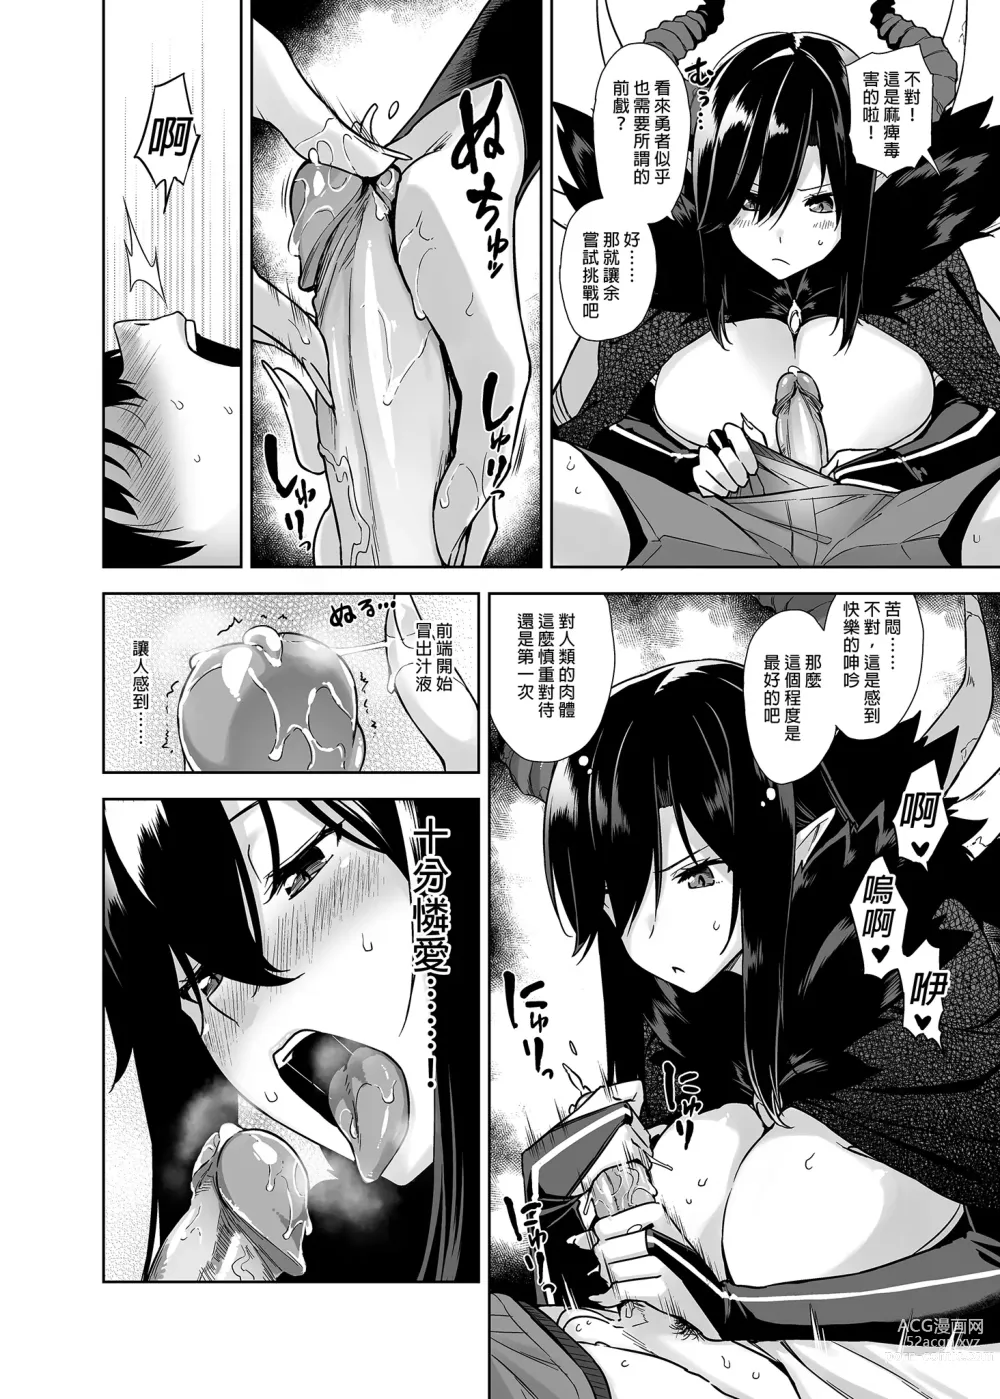 Page 12 of manga 押しかけ魔王と強淫なまハメ生活+後日談